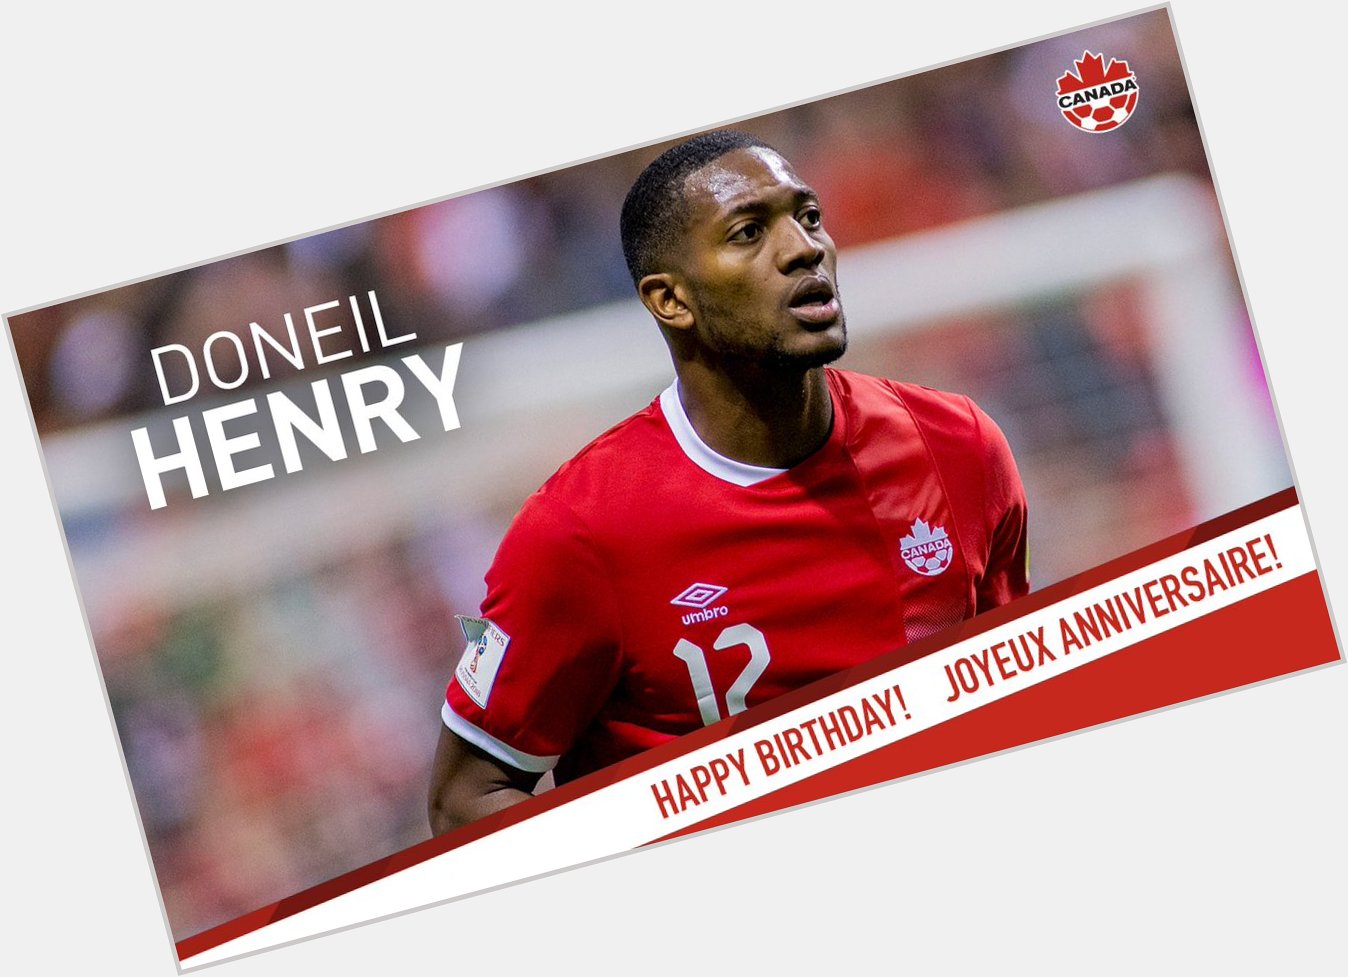 Happy birthday to Doneil Henry! 